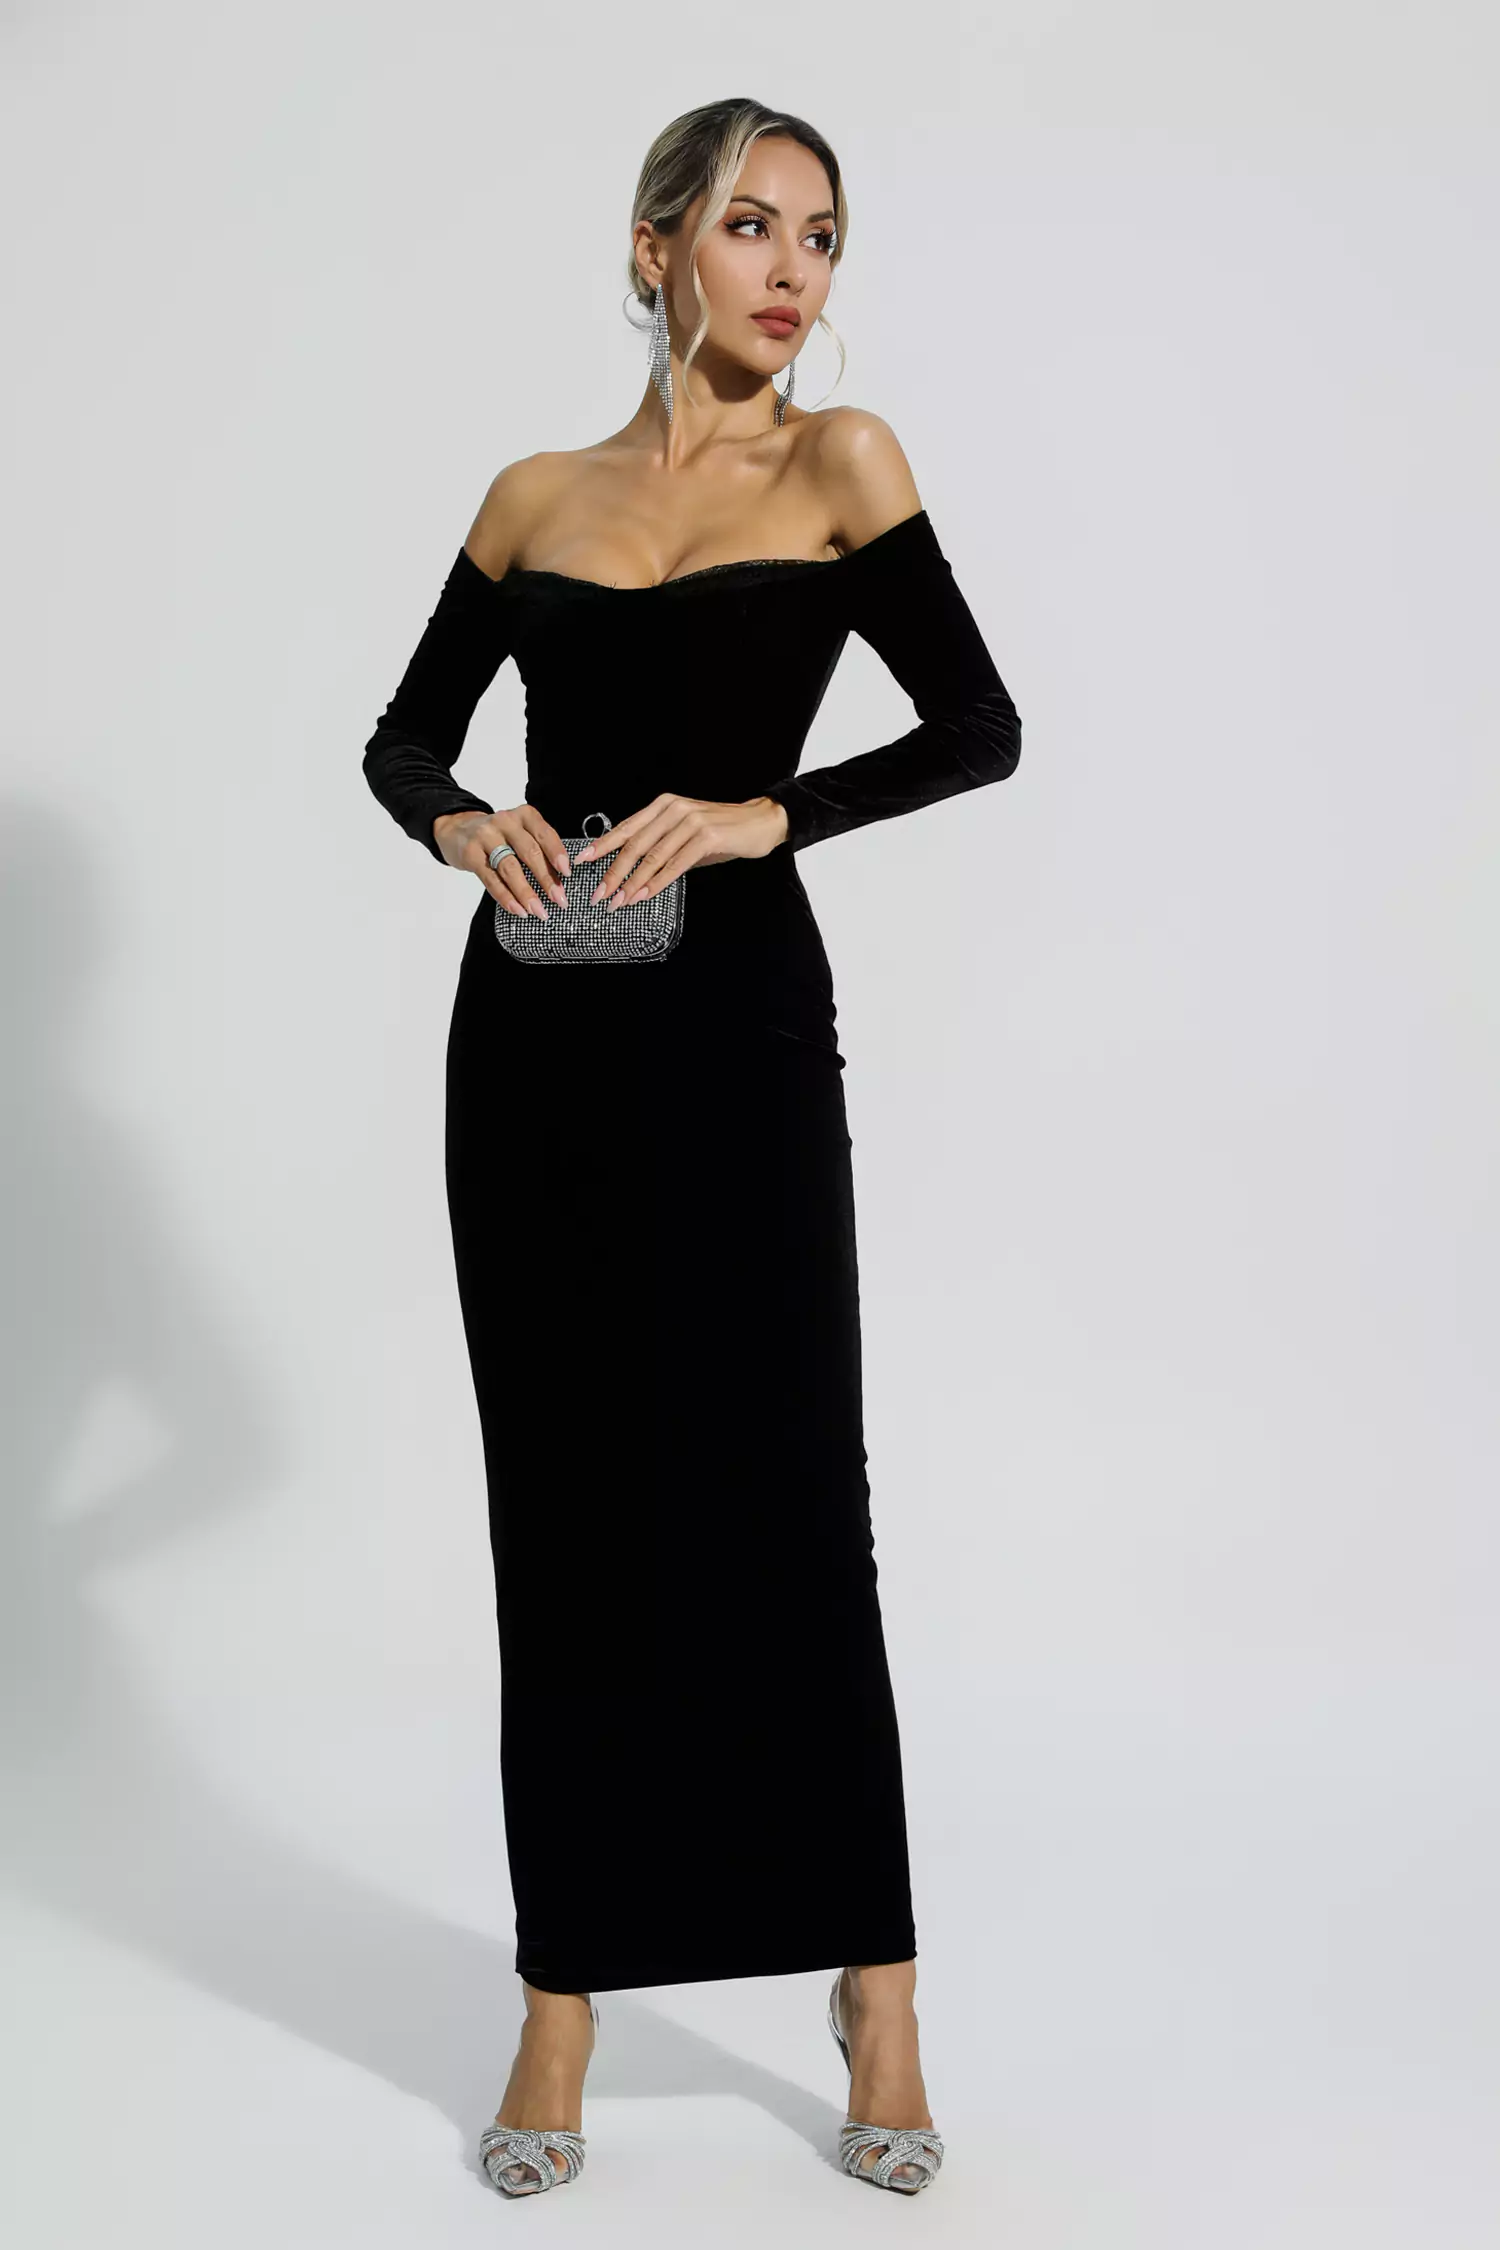 Keilani Black Velvet Long Sleeve Maxi Dress